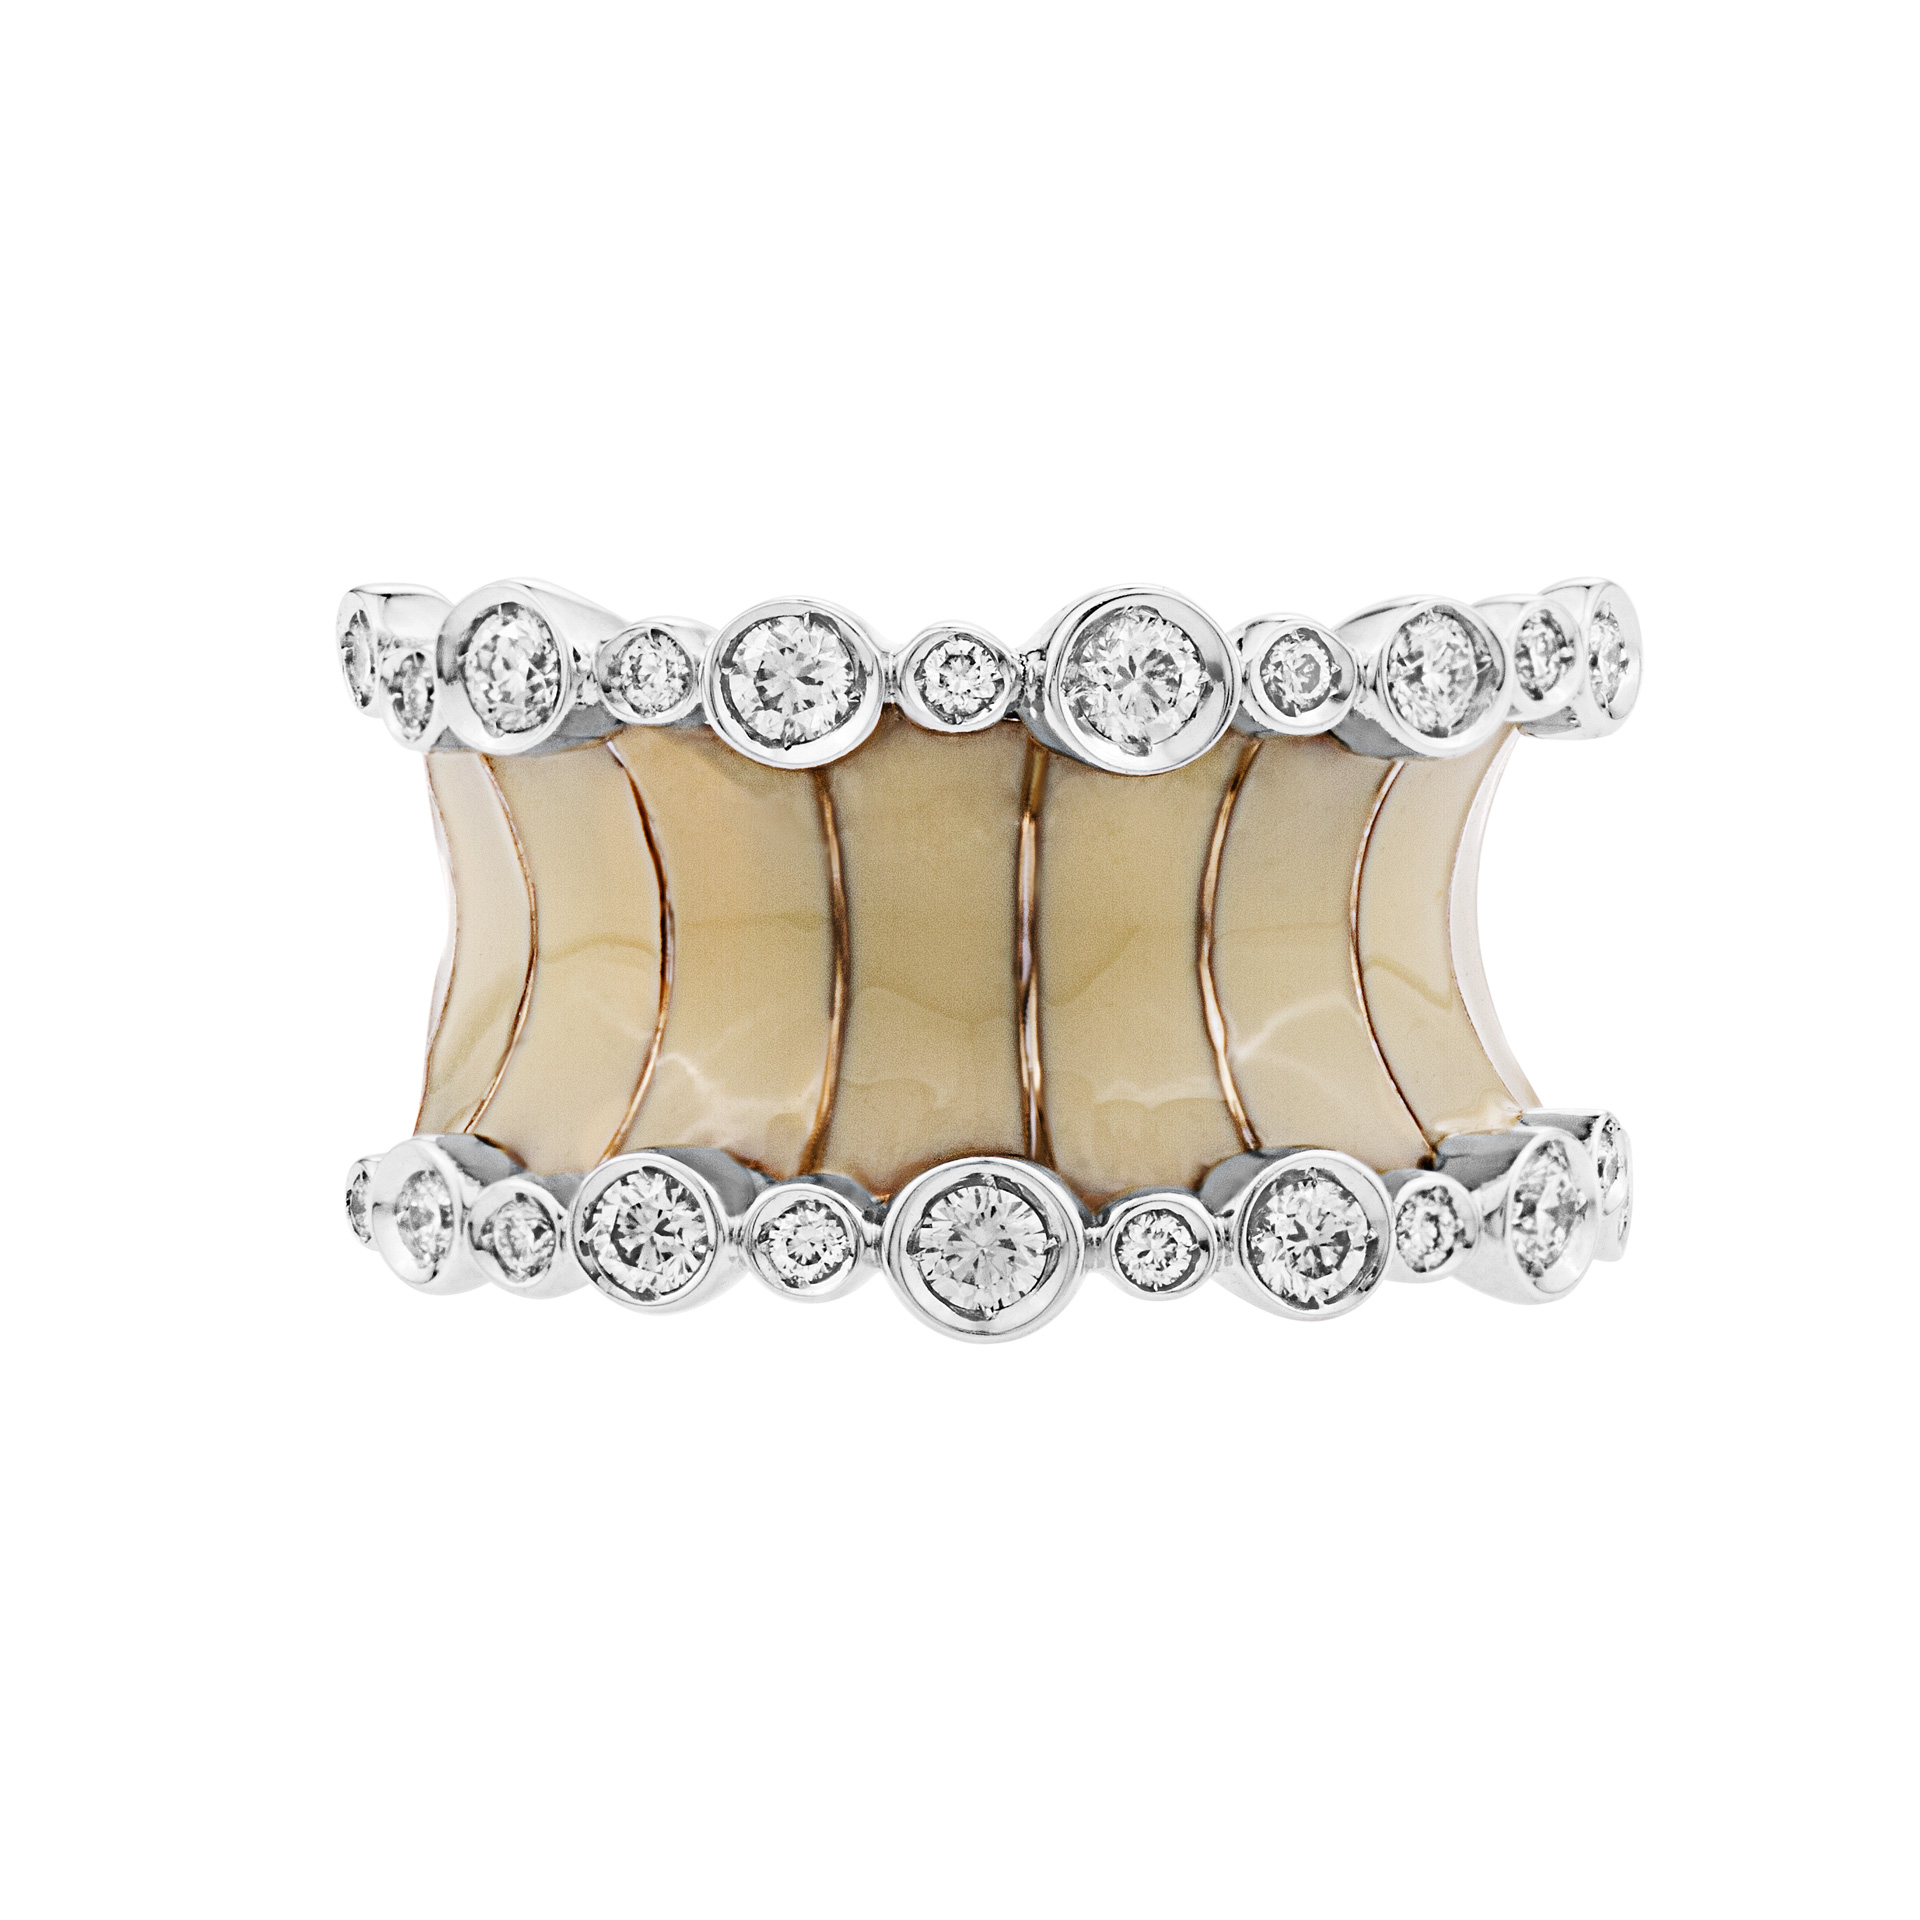 Stefan Hafner diamond ring in 18k white gold. 0.61 carats in diamonds. Size 6.75 image 1